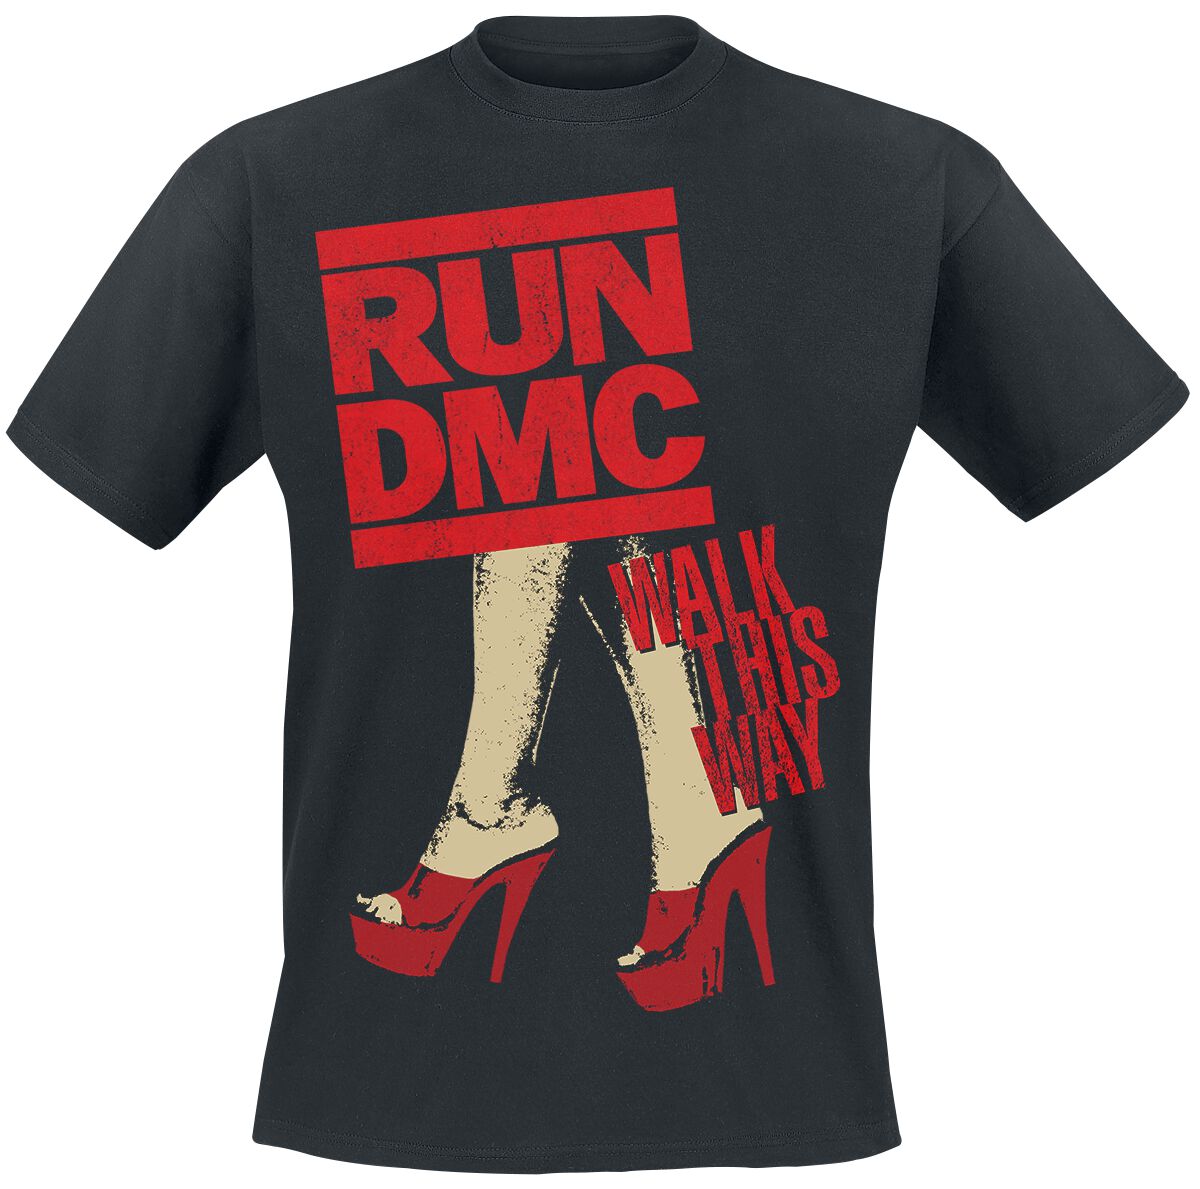 Run DMC Walk This Way Legs T-Shirt schwarz in S